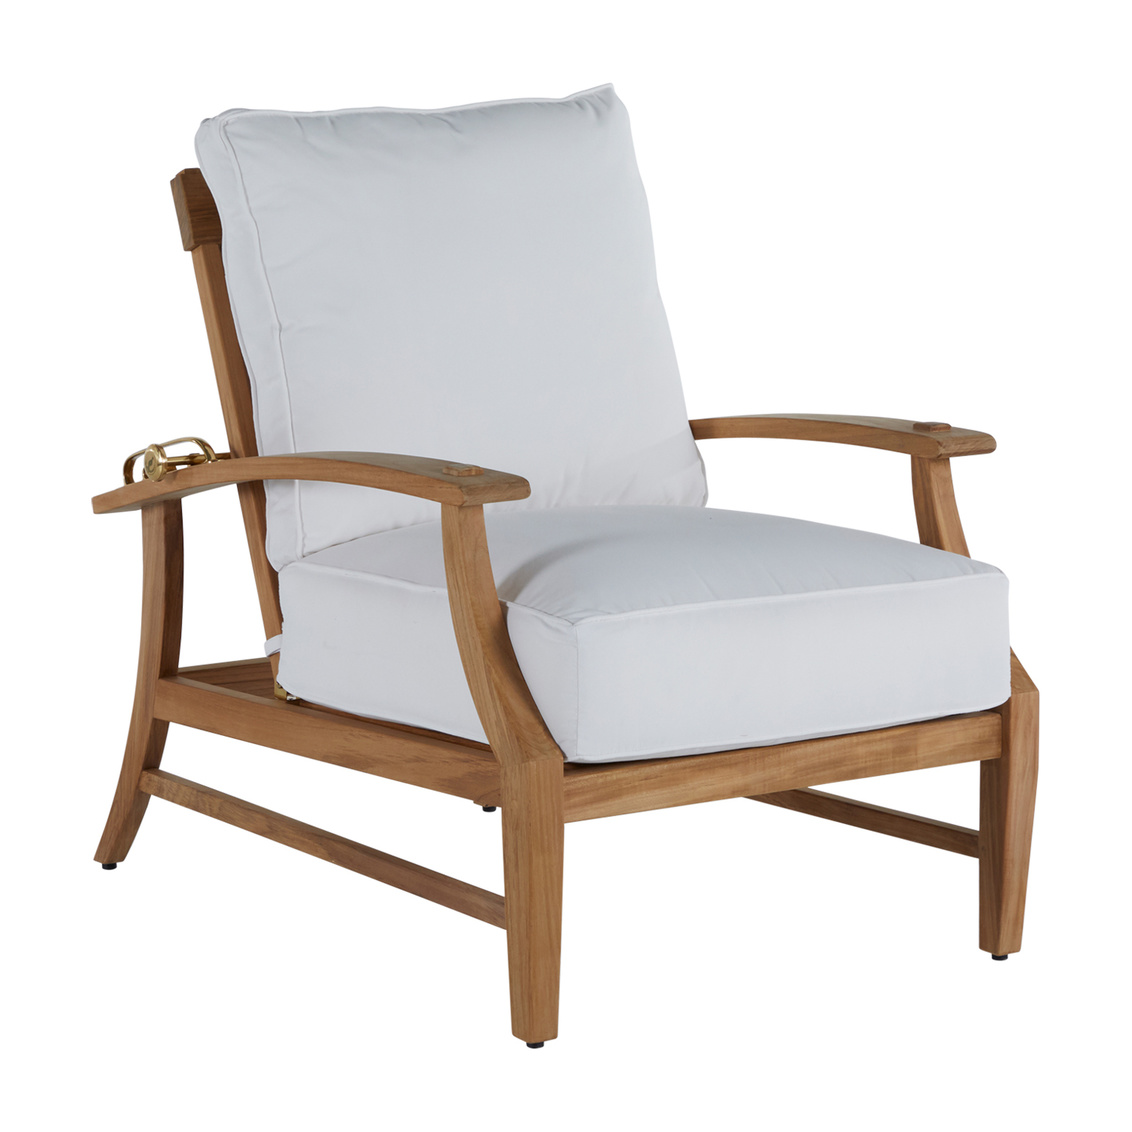 croquet teak recliner in natural teak – frame only product image